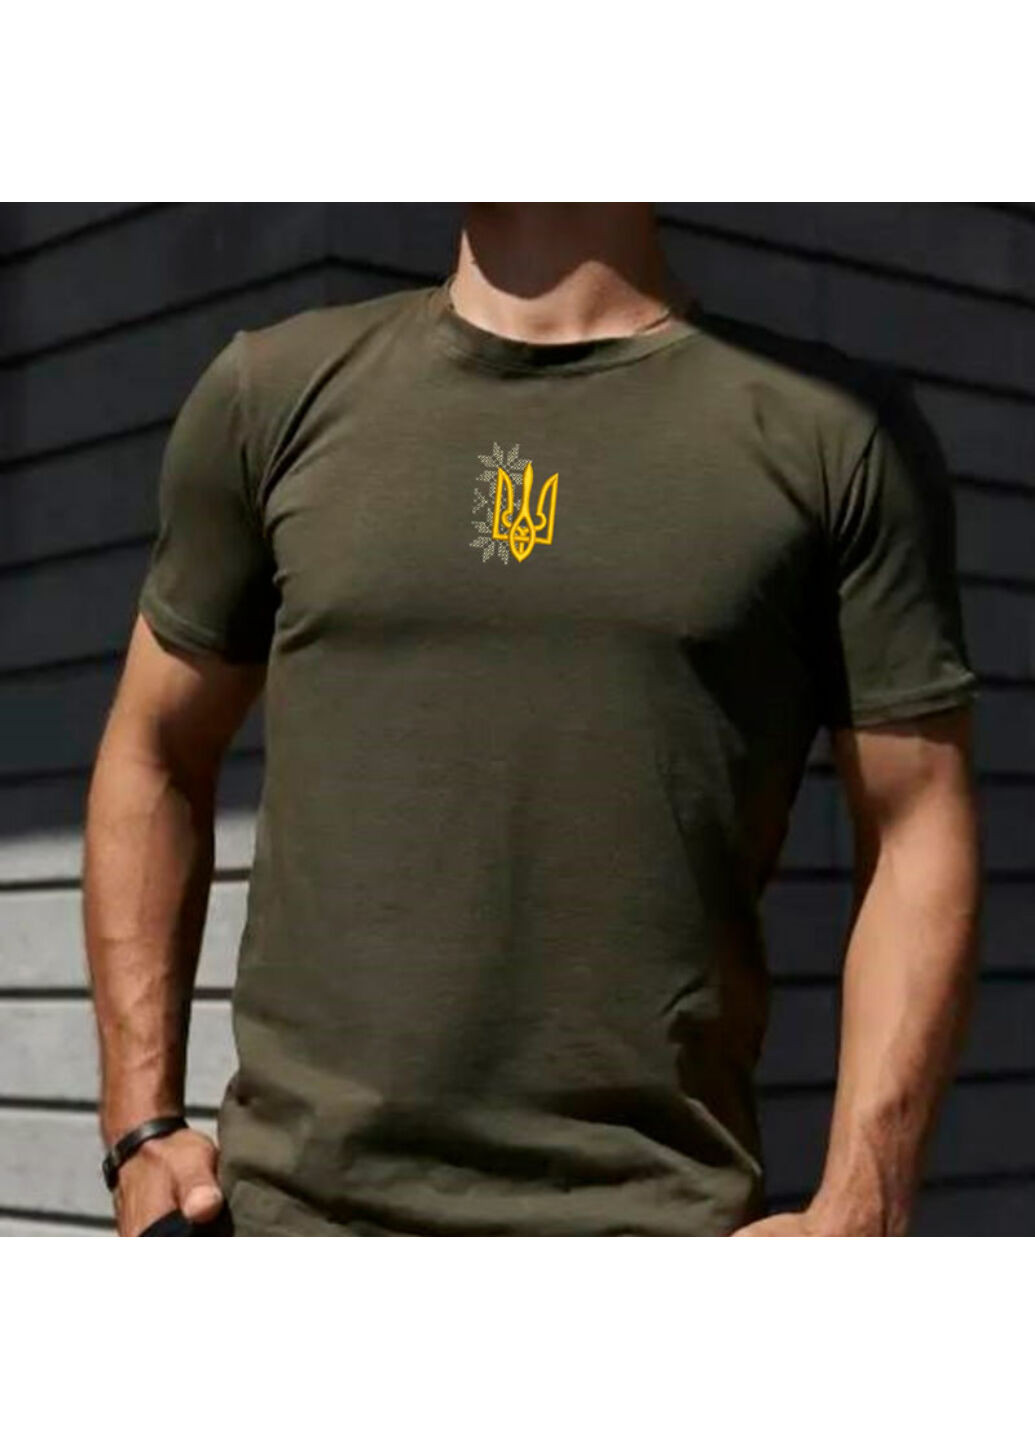 Хаки (оливковая) футболка з вишивкою тризуба 01-1 мужская хаки 3xl No Brand